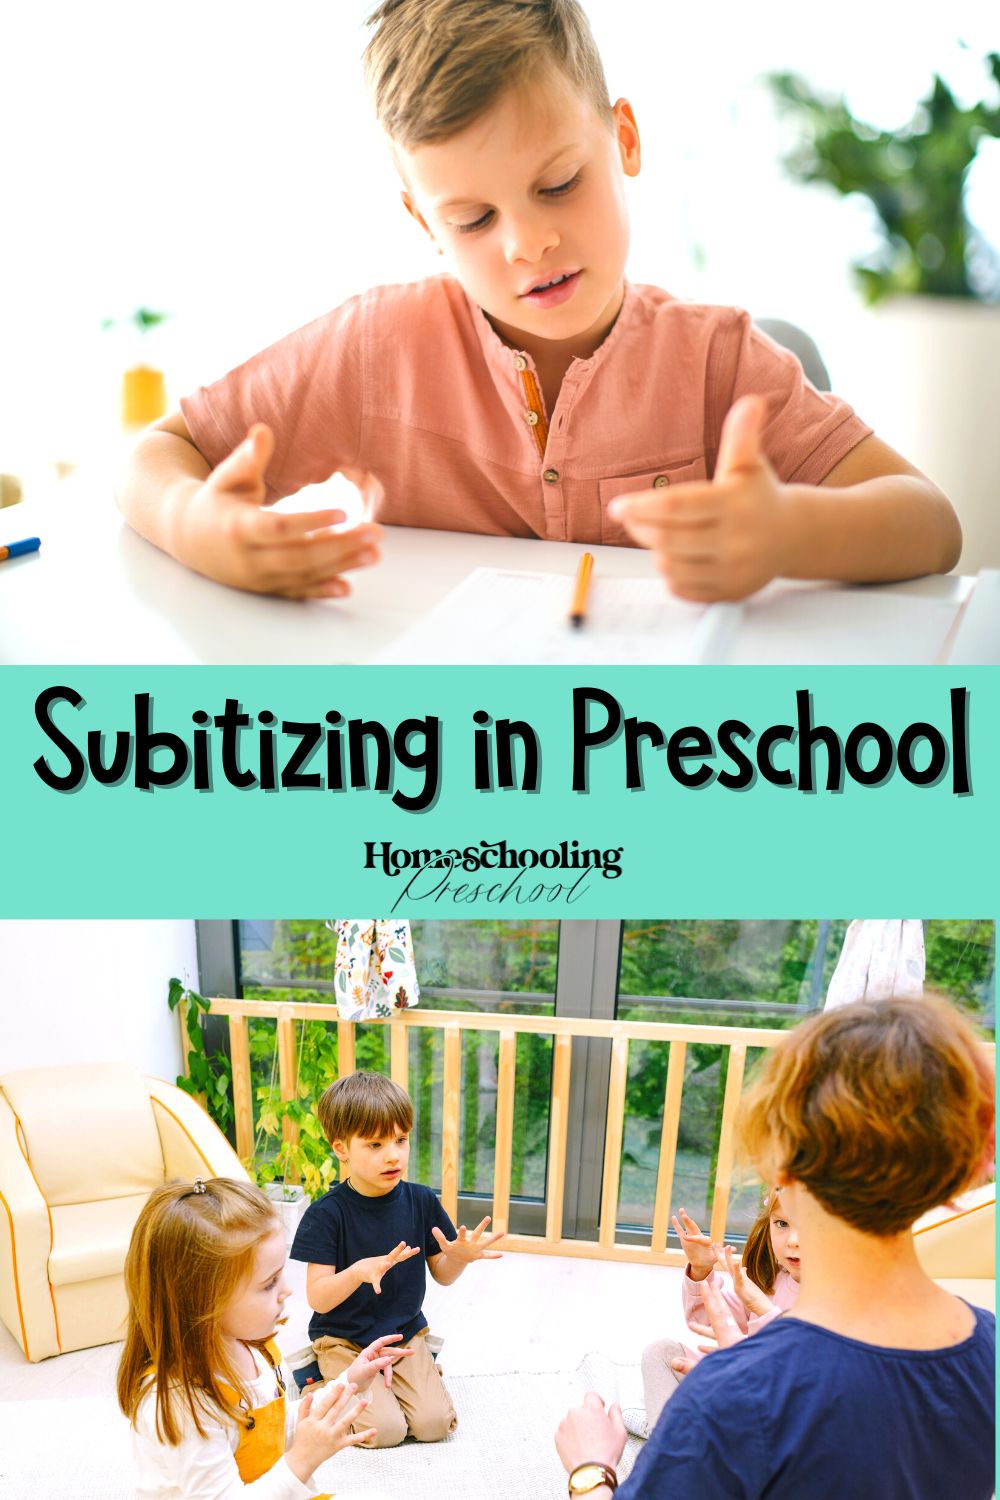 Subitizing in Preschool